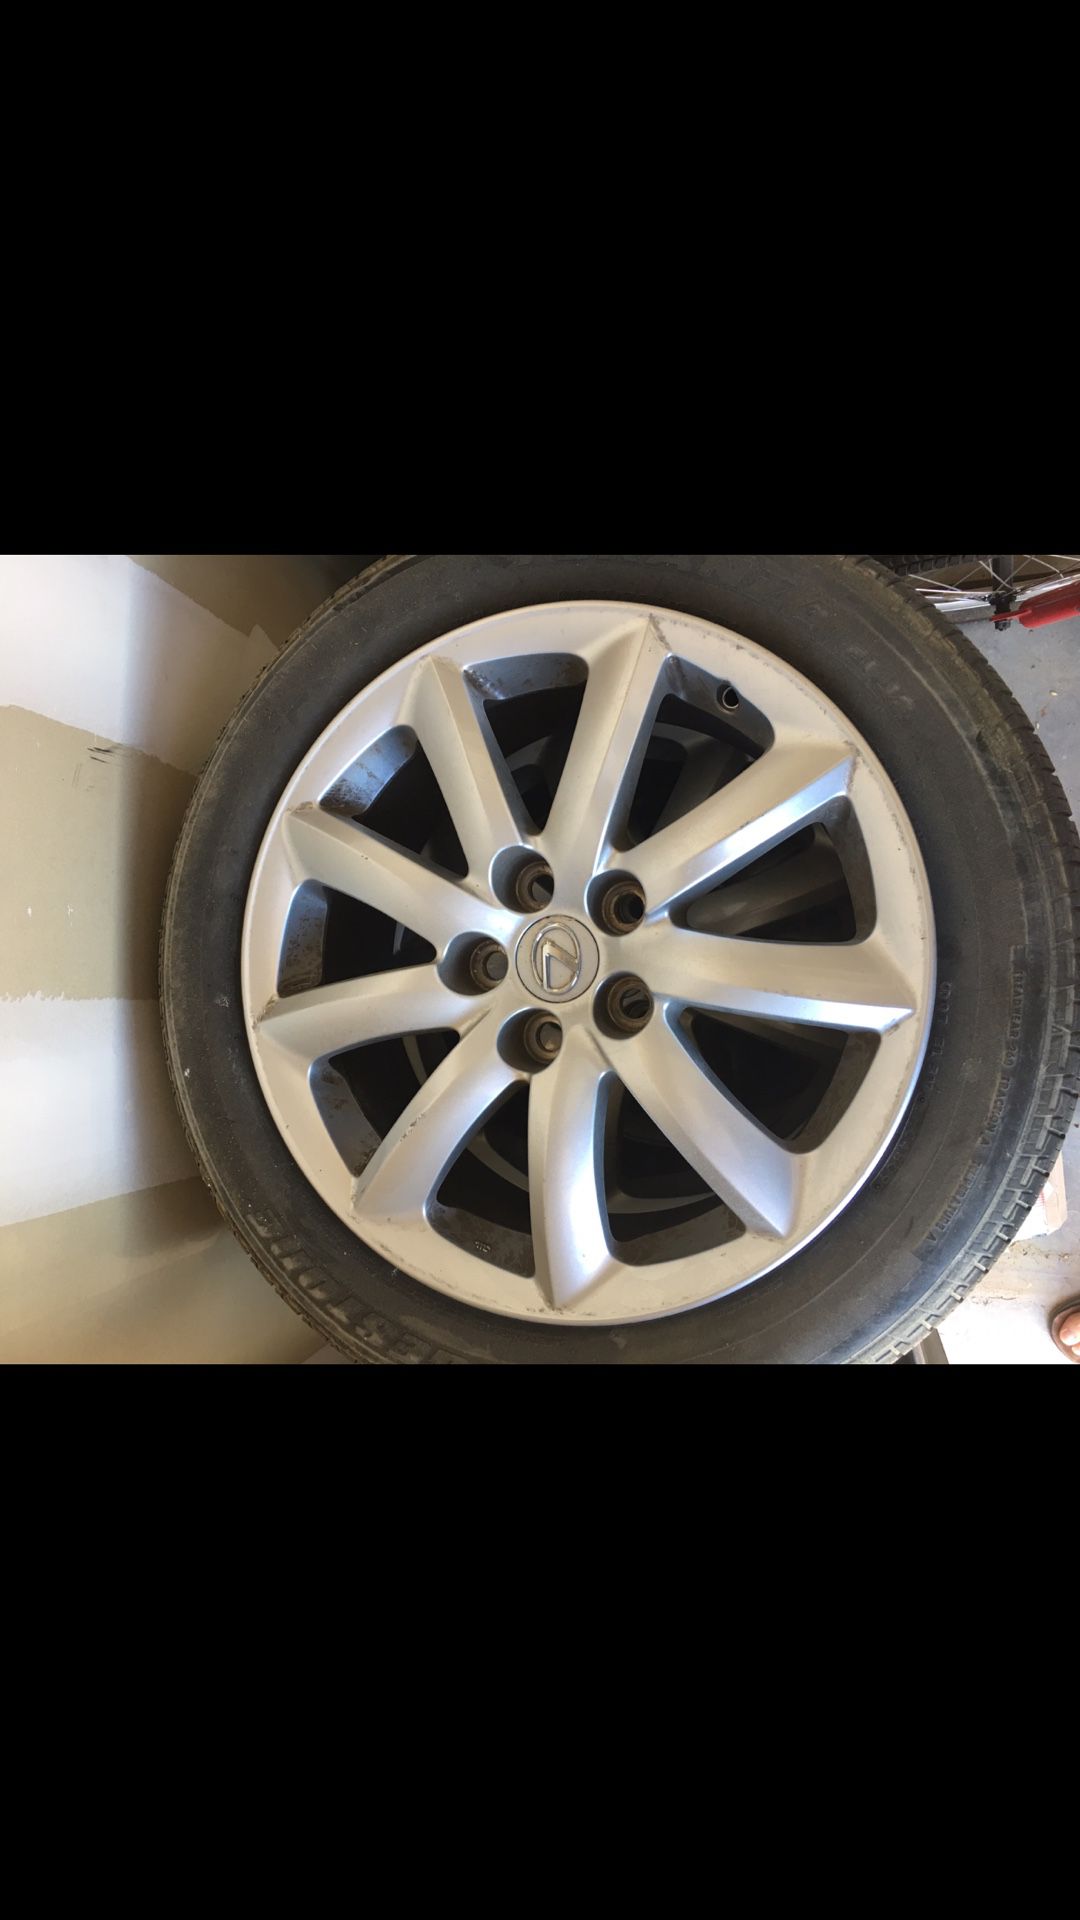 Lexus LS460 stock rims / wheels and tires